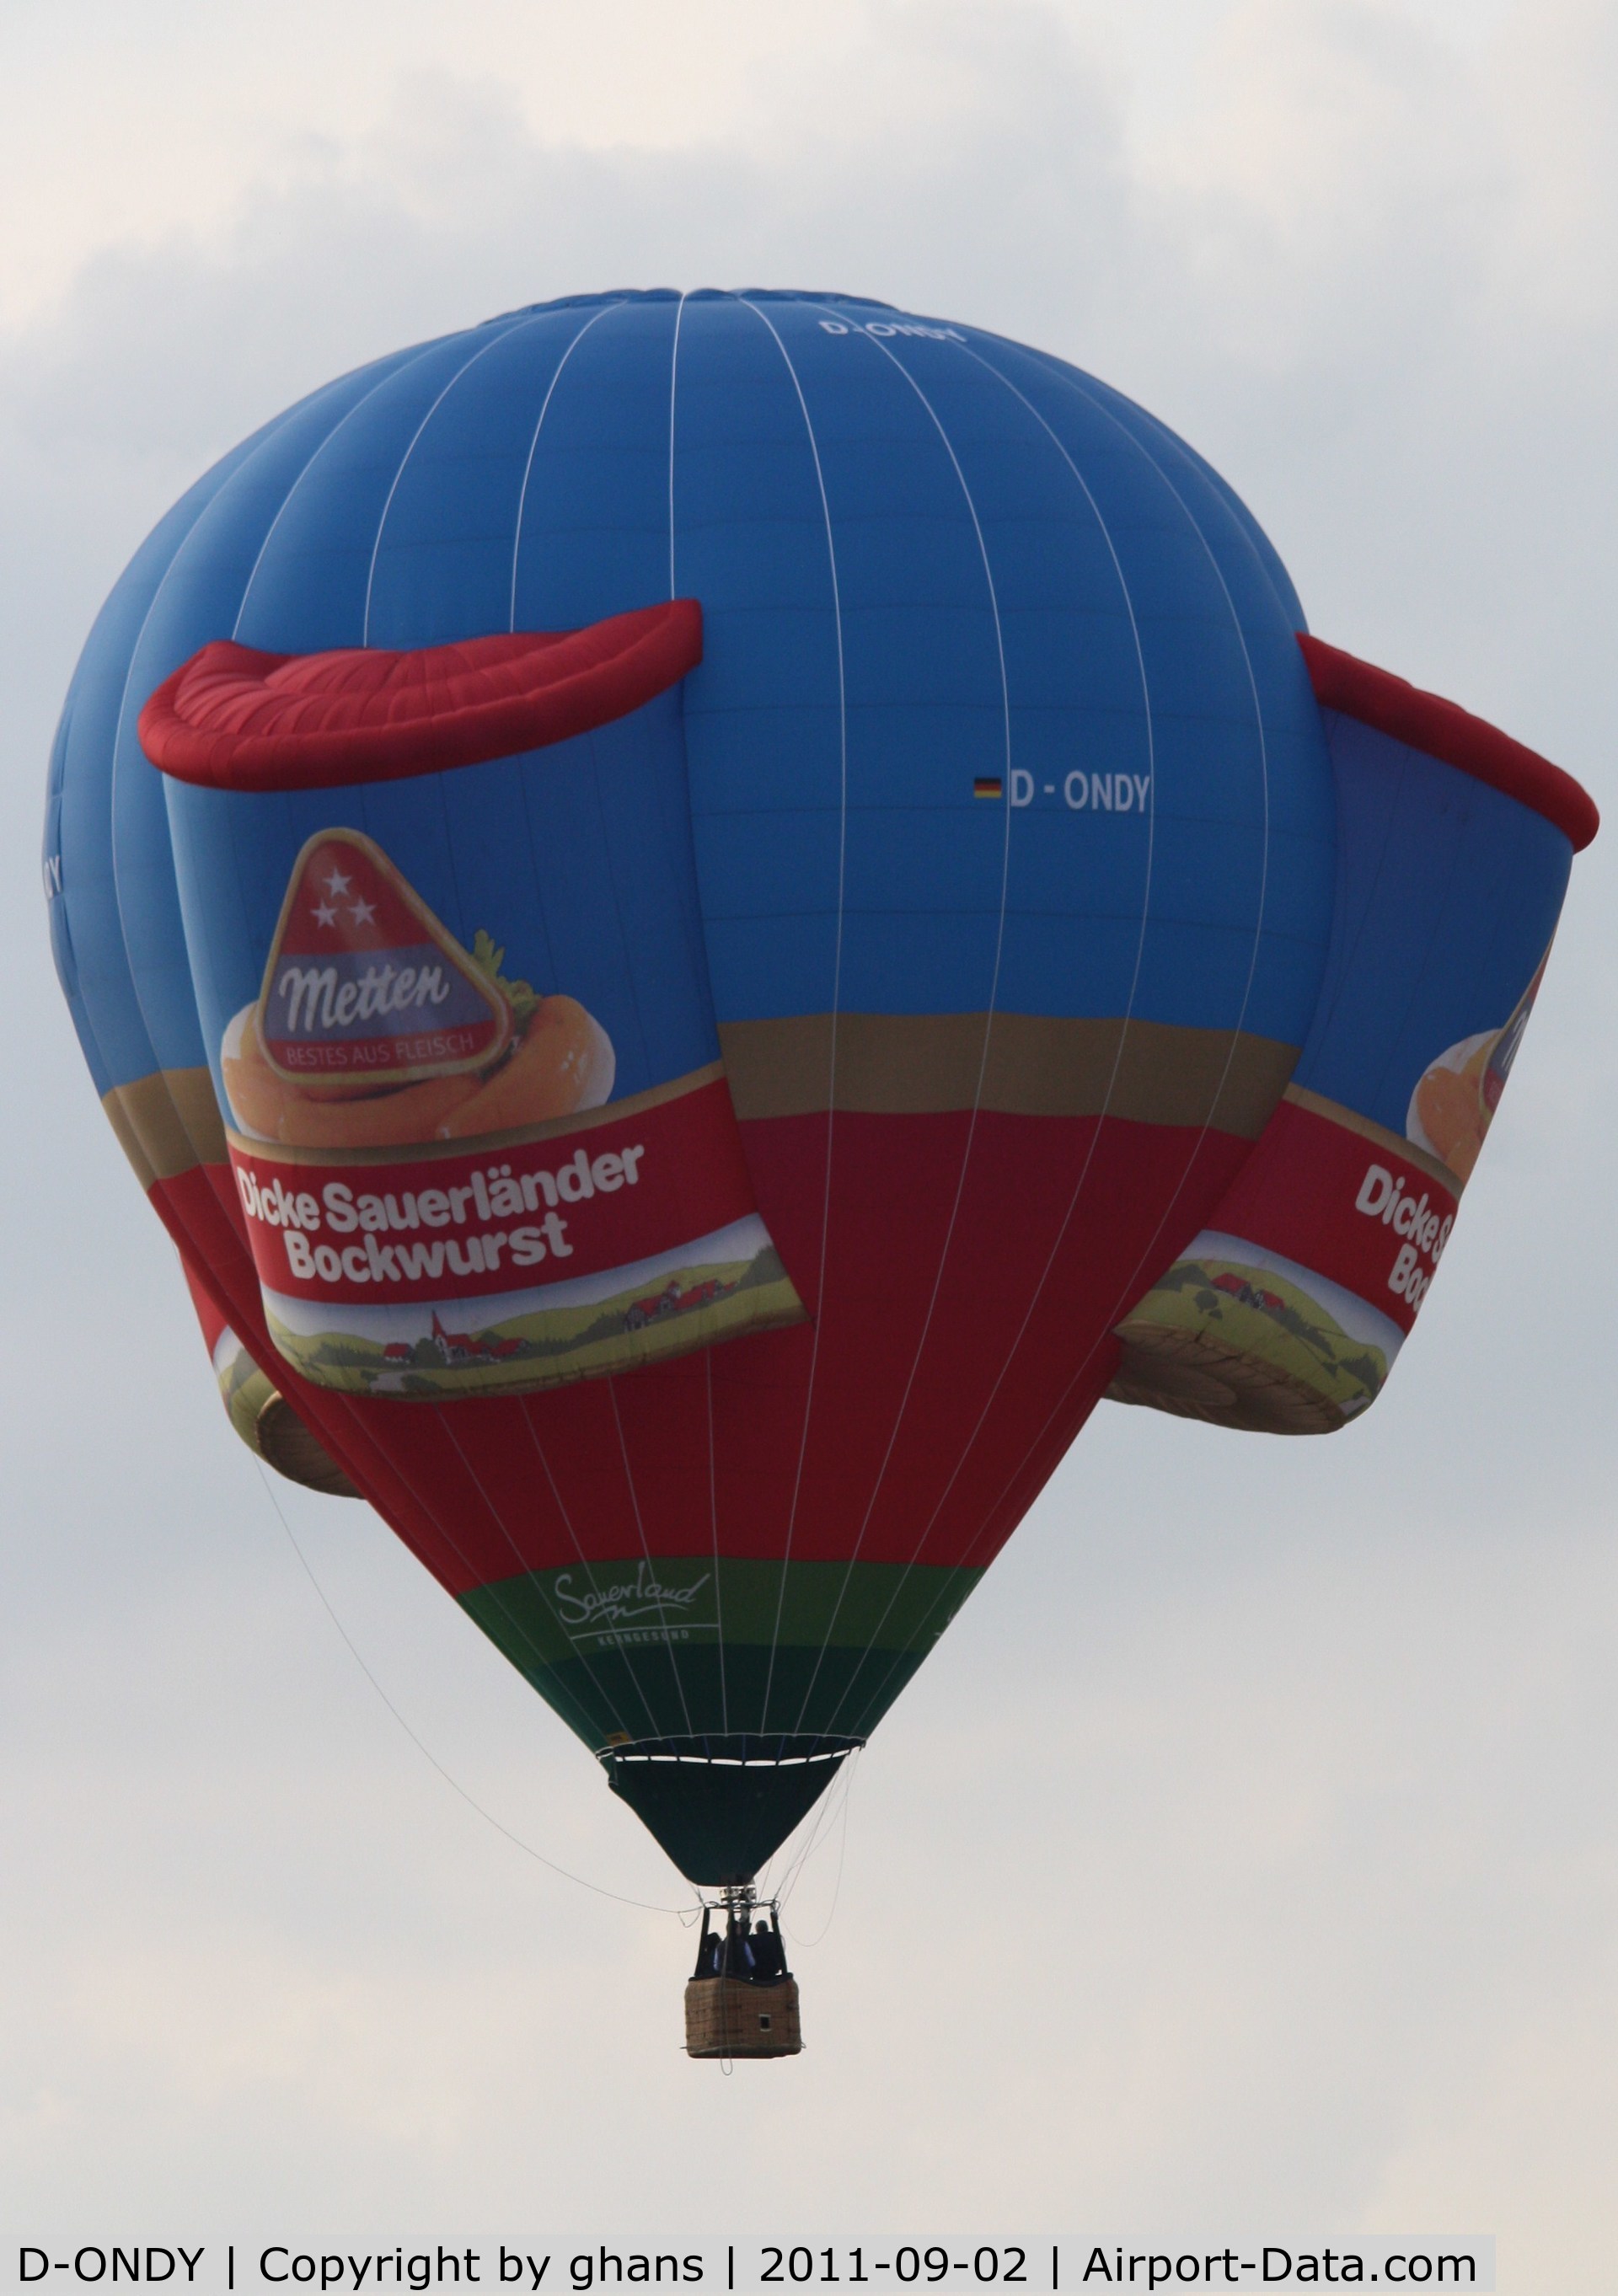 D-ONDY, 1999 Cameron Balloons Ltd. CAM N-105 C/N 4630, WIM 2011
'Dicke Sauerländer Bockwurst'